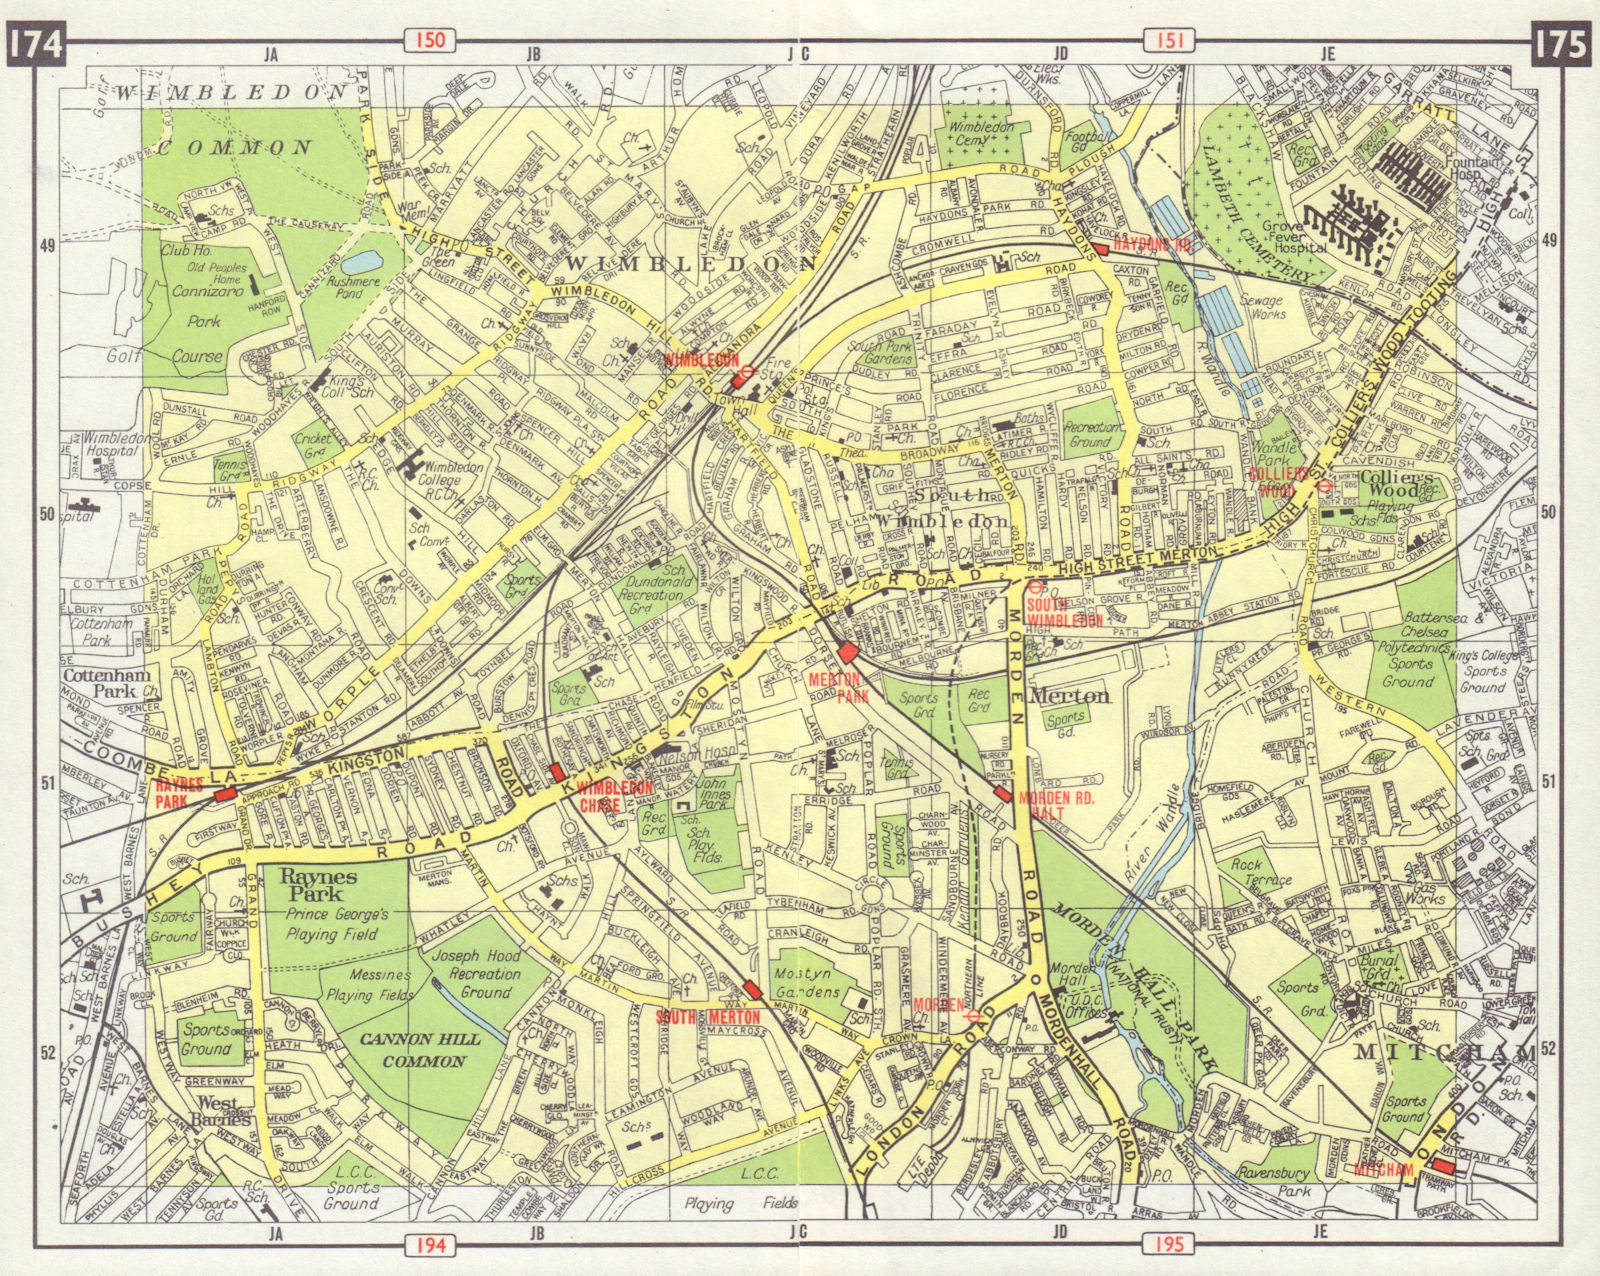 SW LONDON Wimbledon Collier's Wood Merton Morden Raynes Park Mitcham 1965 map